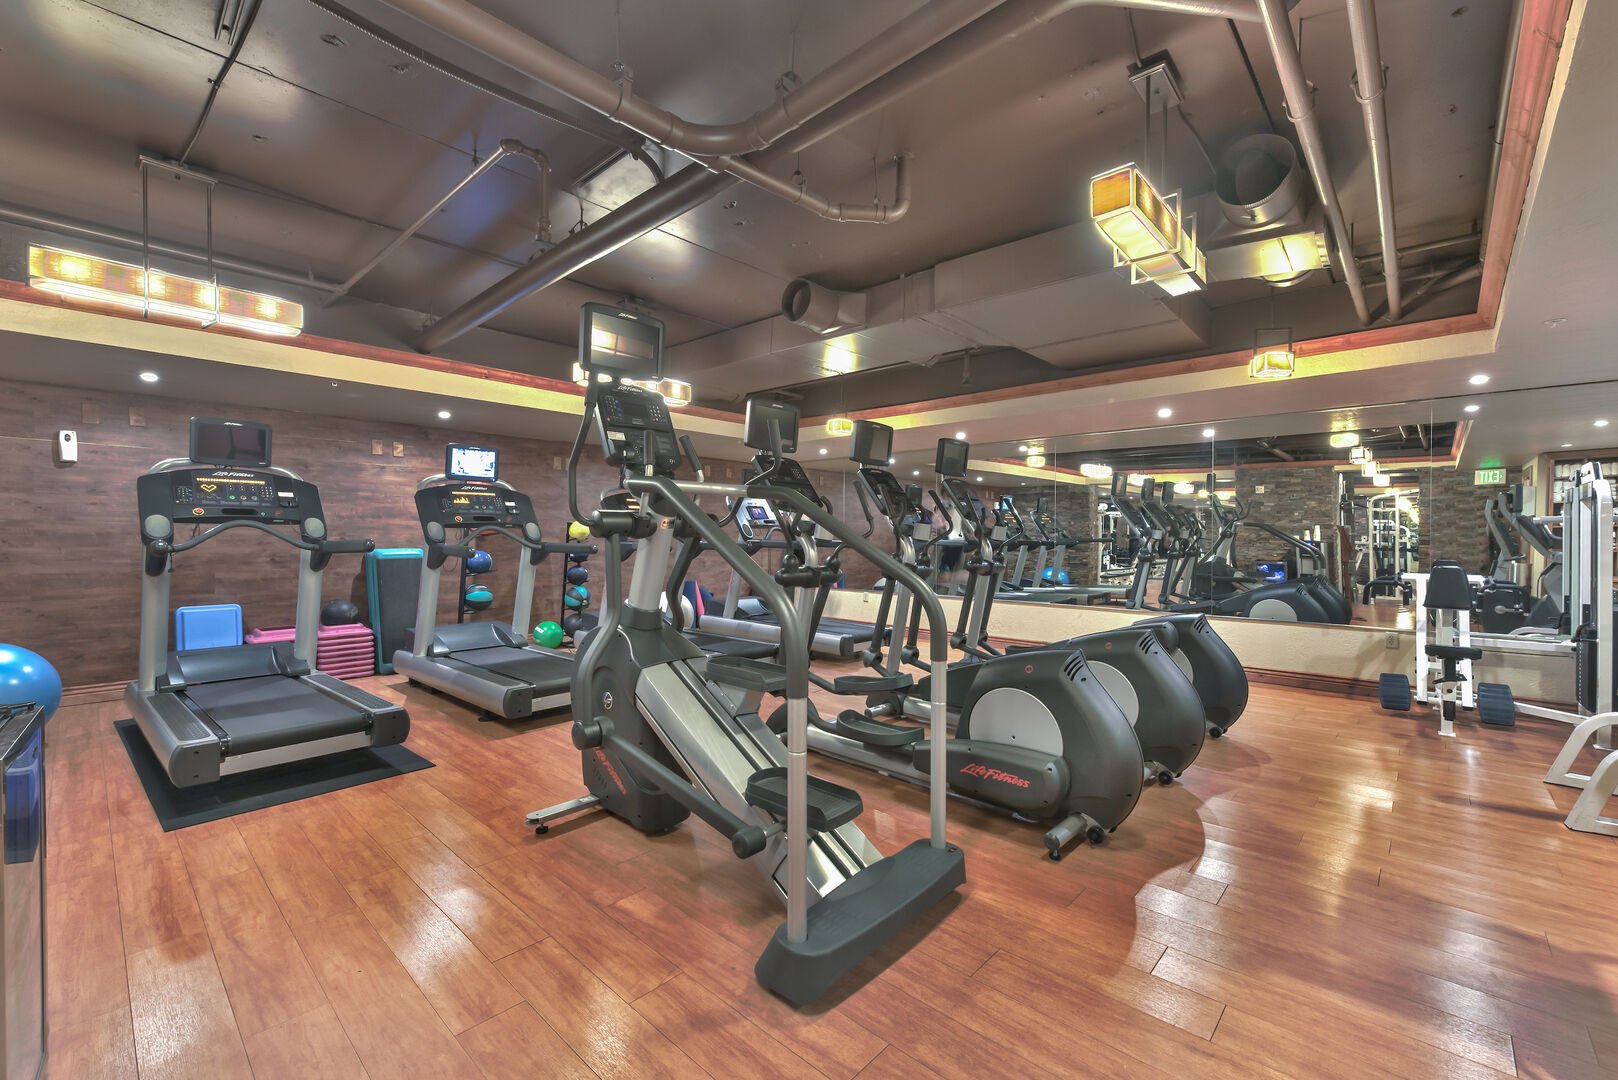 Westgate Resort fitness center.